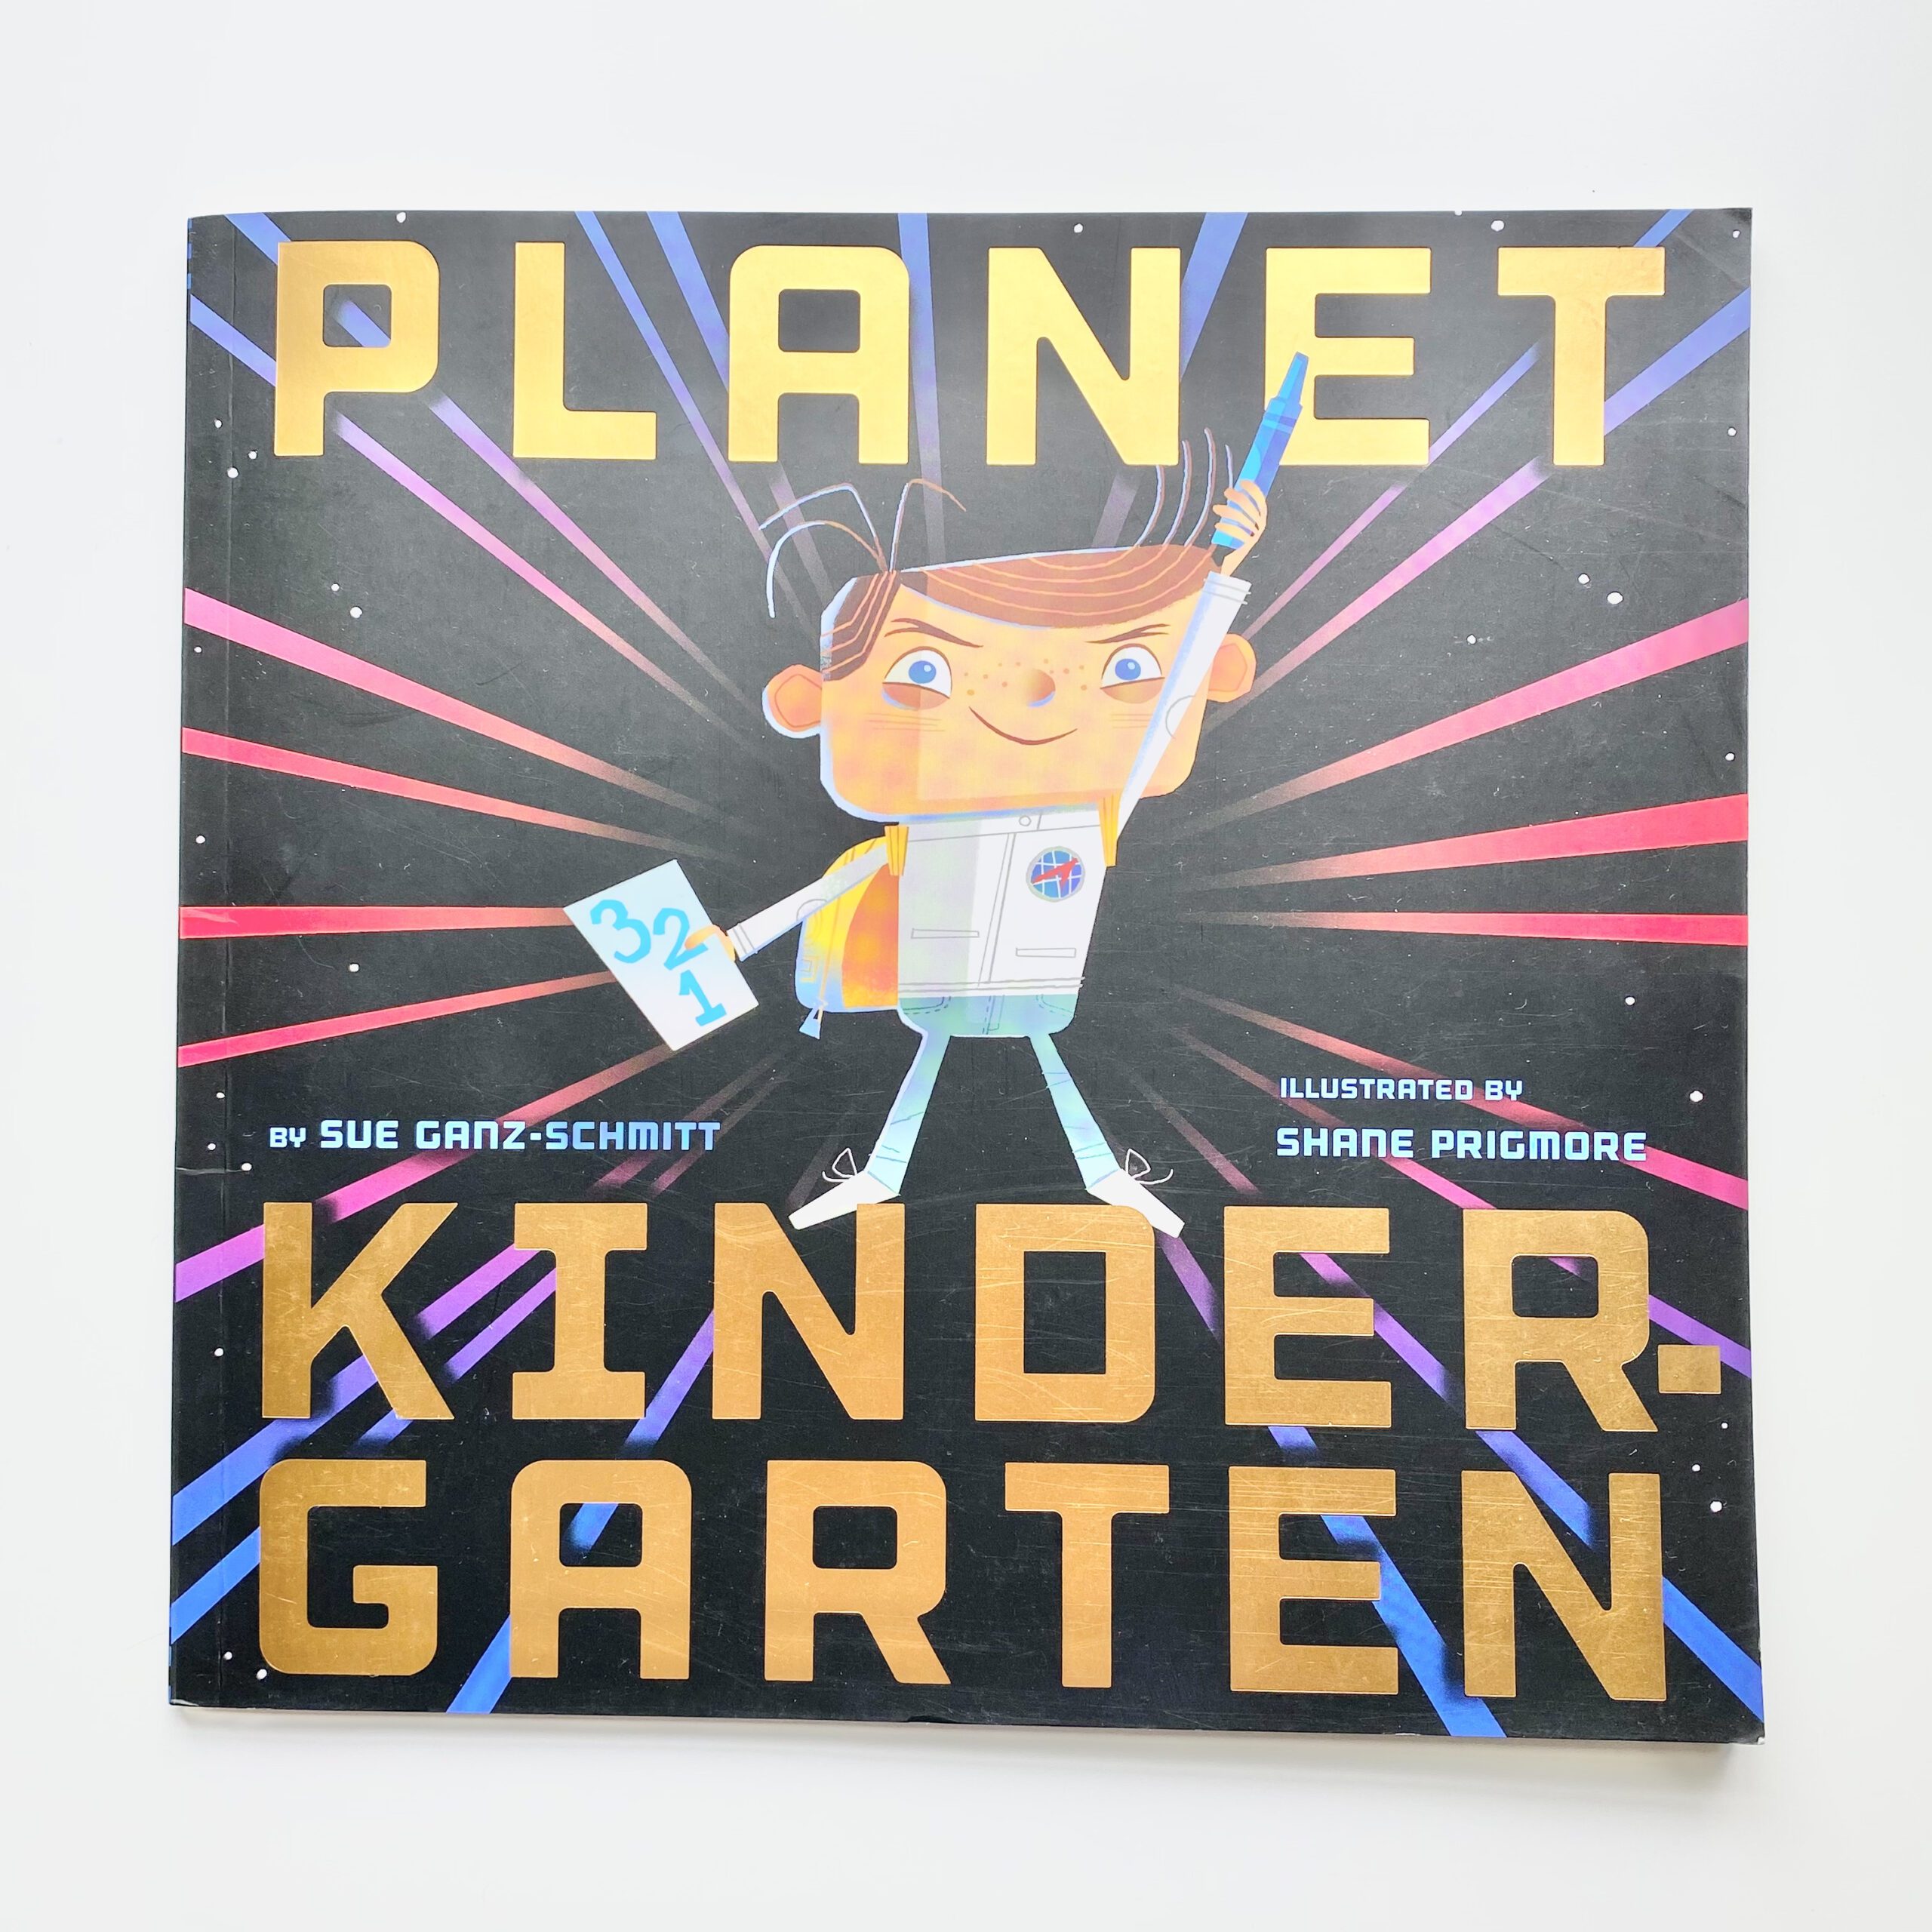 Planet Kindergarten by Sue Ganz-Schmitt and illustrated by Shane Prigmore